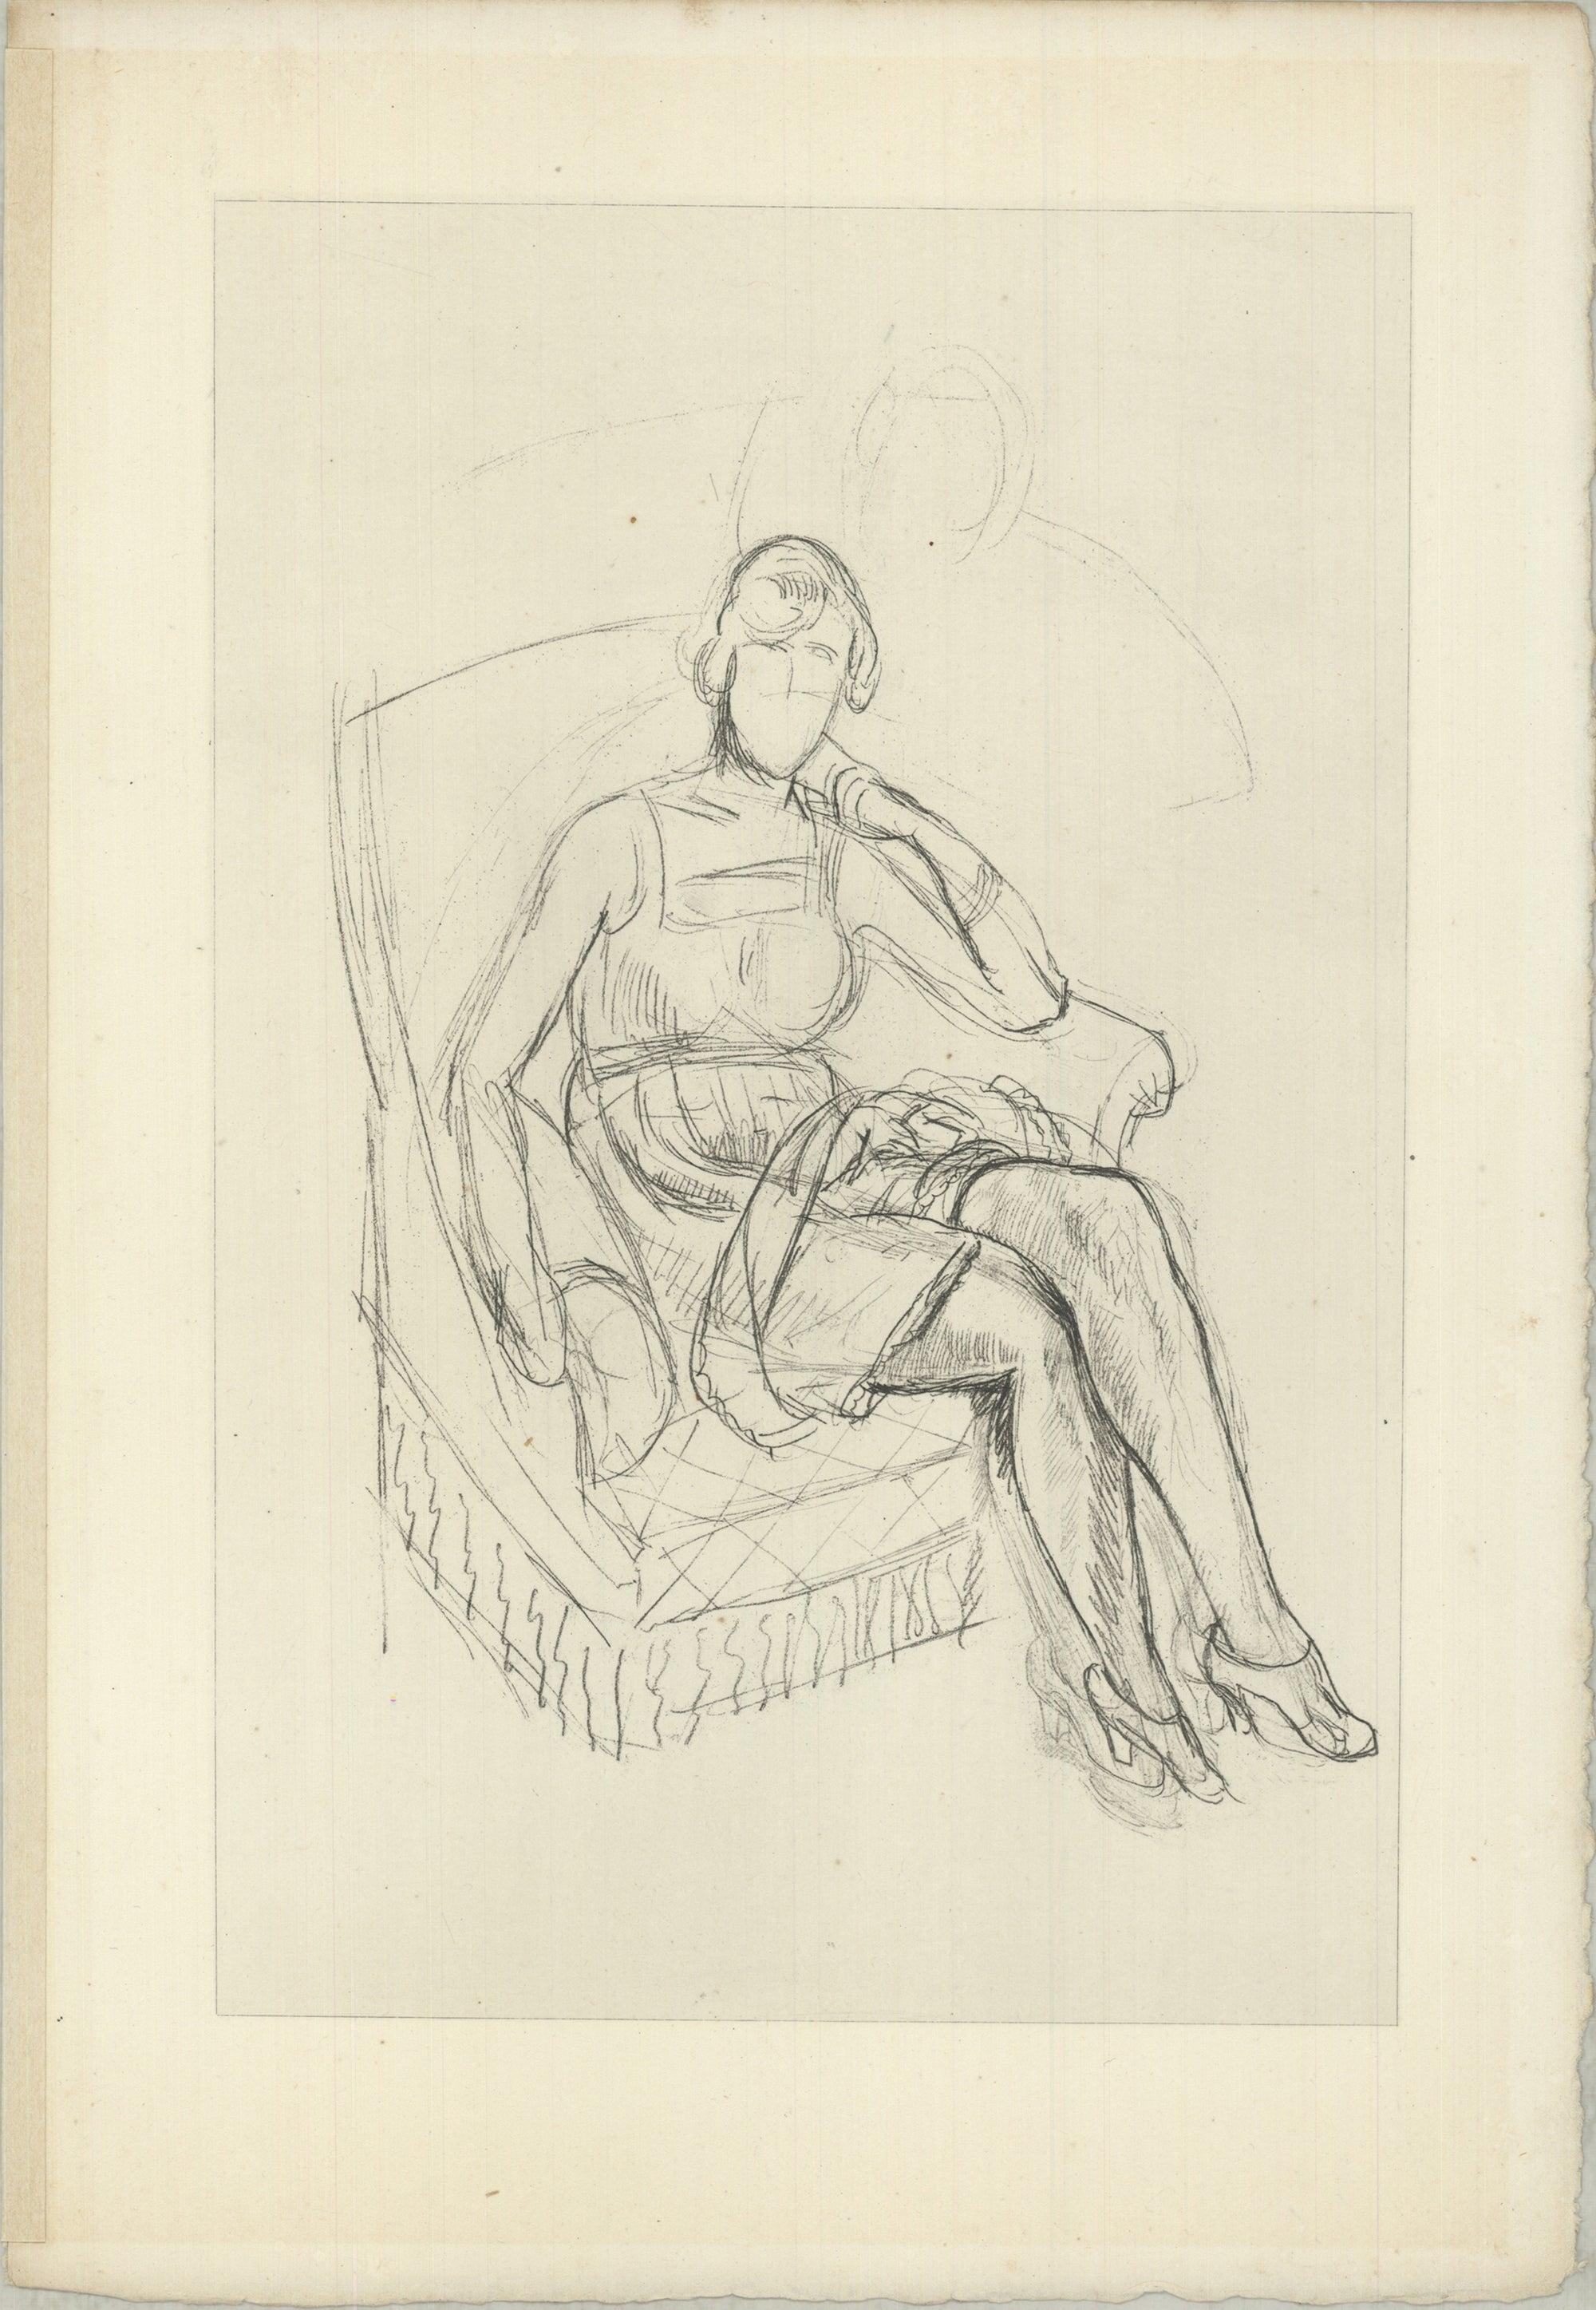 HENRI MATISSE Planche XI, 1920, Lithograph FIRST EDITION - Print by Henri Matisse